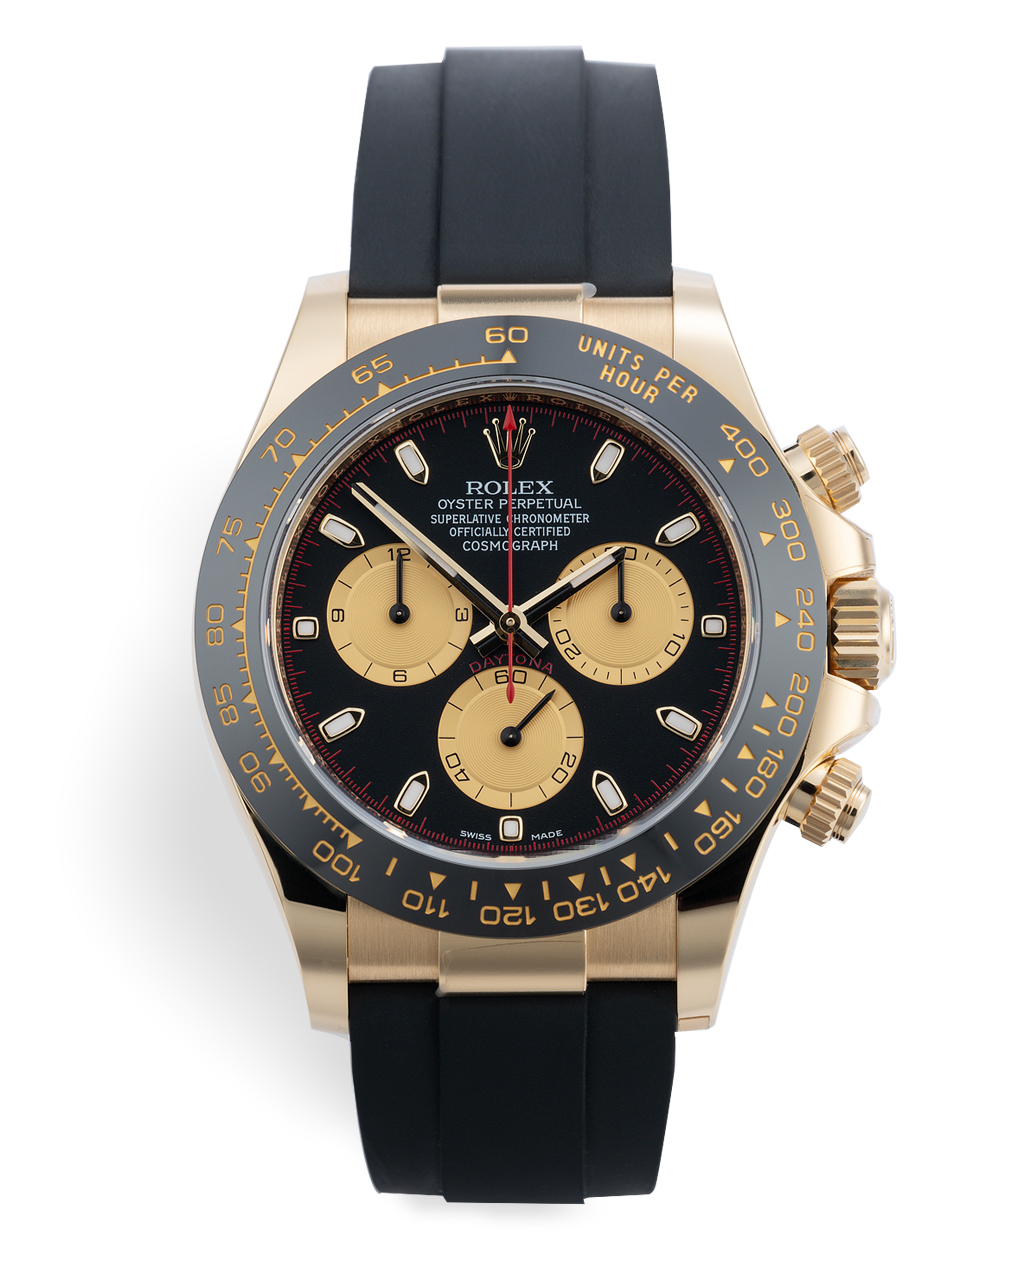 Rolex Cosmograph Daytona Watches | ref 116518LN | Brand New '5 Year ...